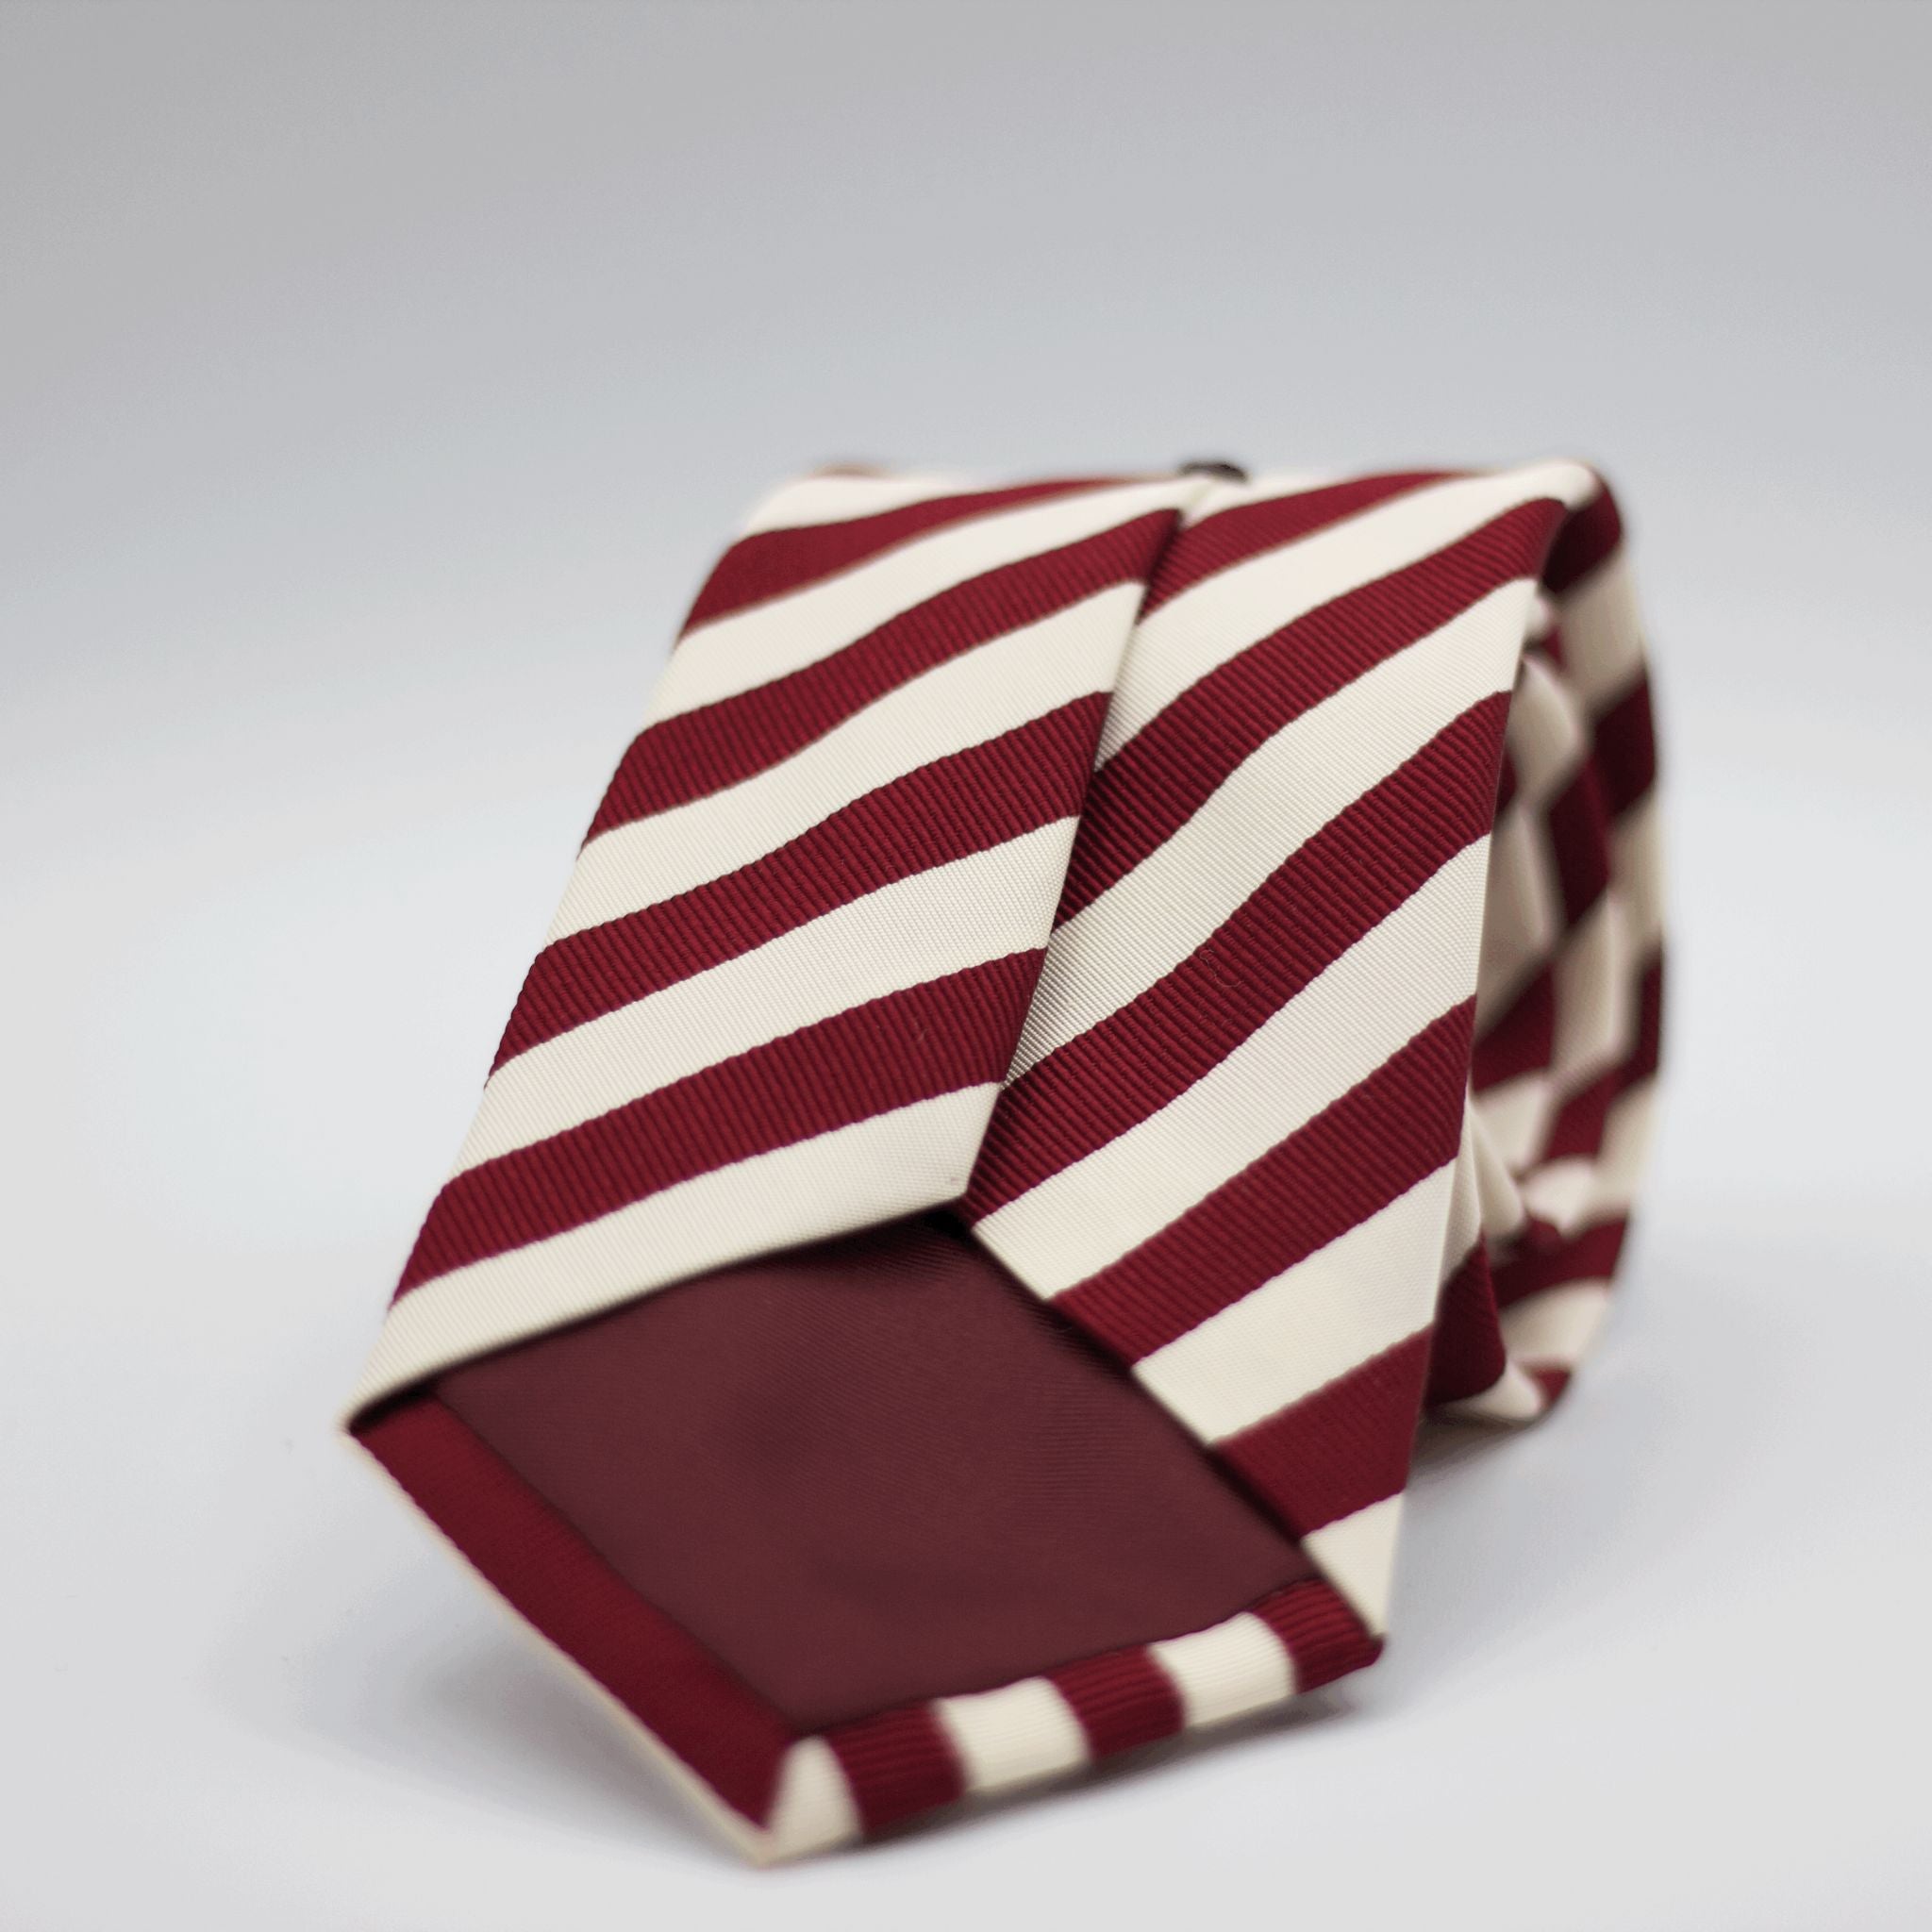 N.O.S. Cruciani & Bella - Repp Woven Silk  - White and Burgundy striped Tie